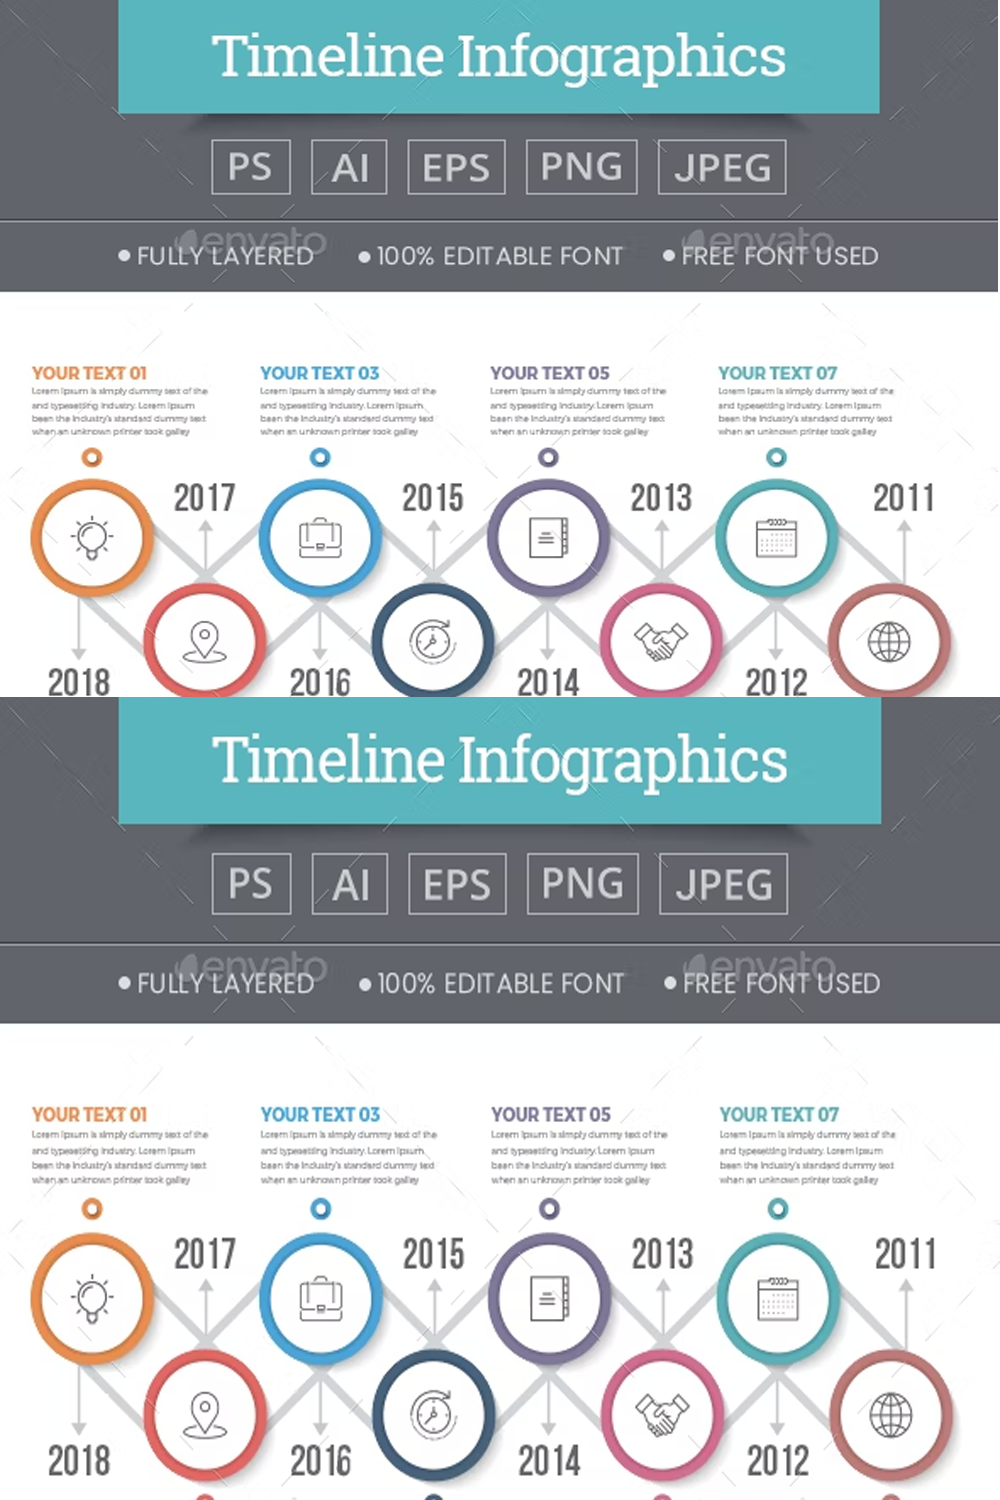 Illustrations timeline infographics of pinterest.